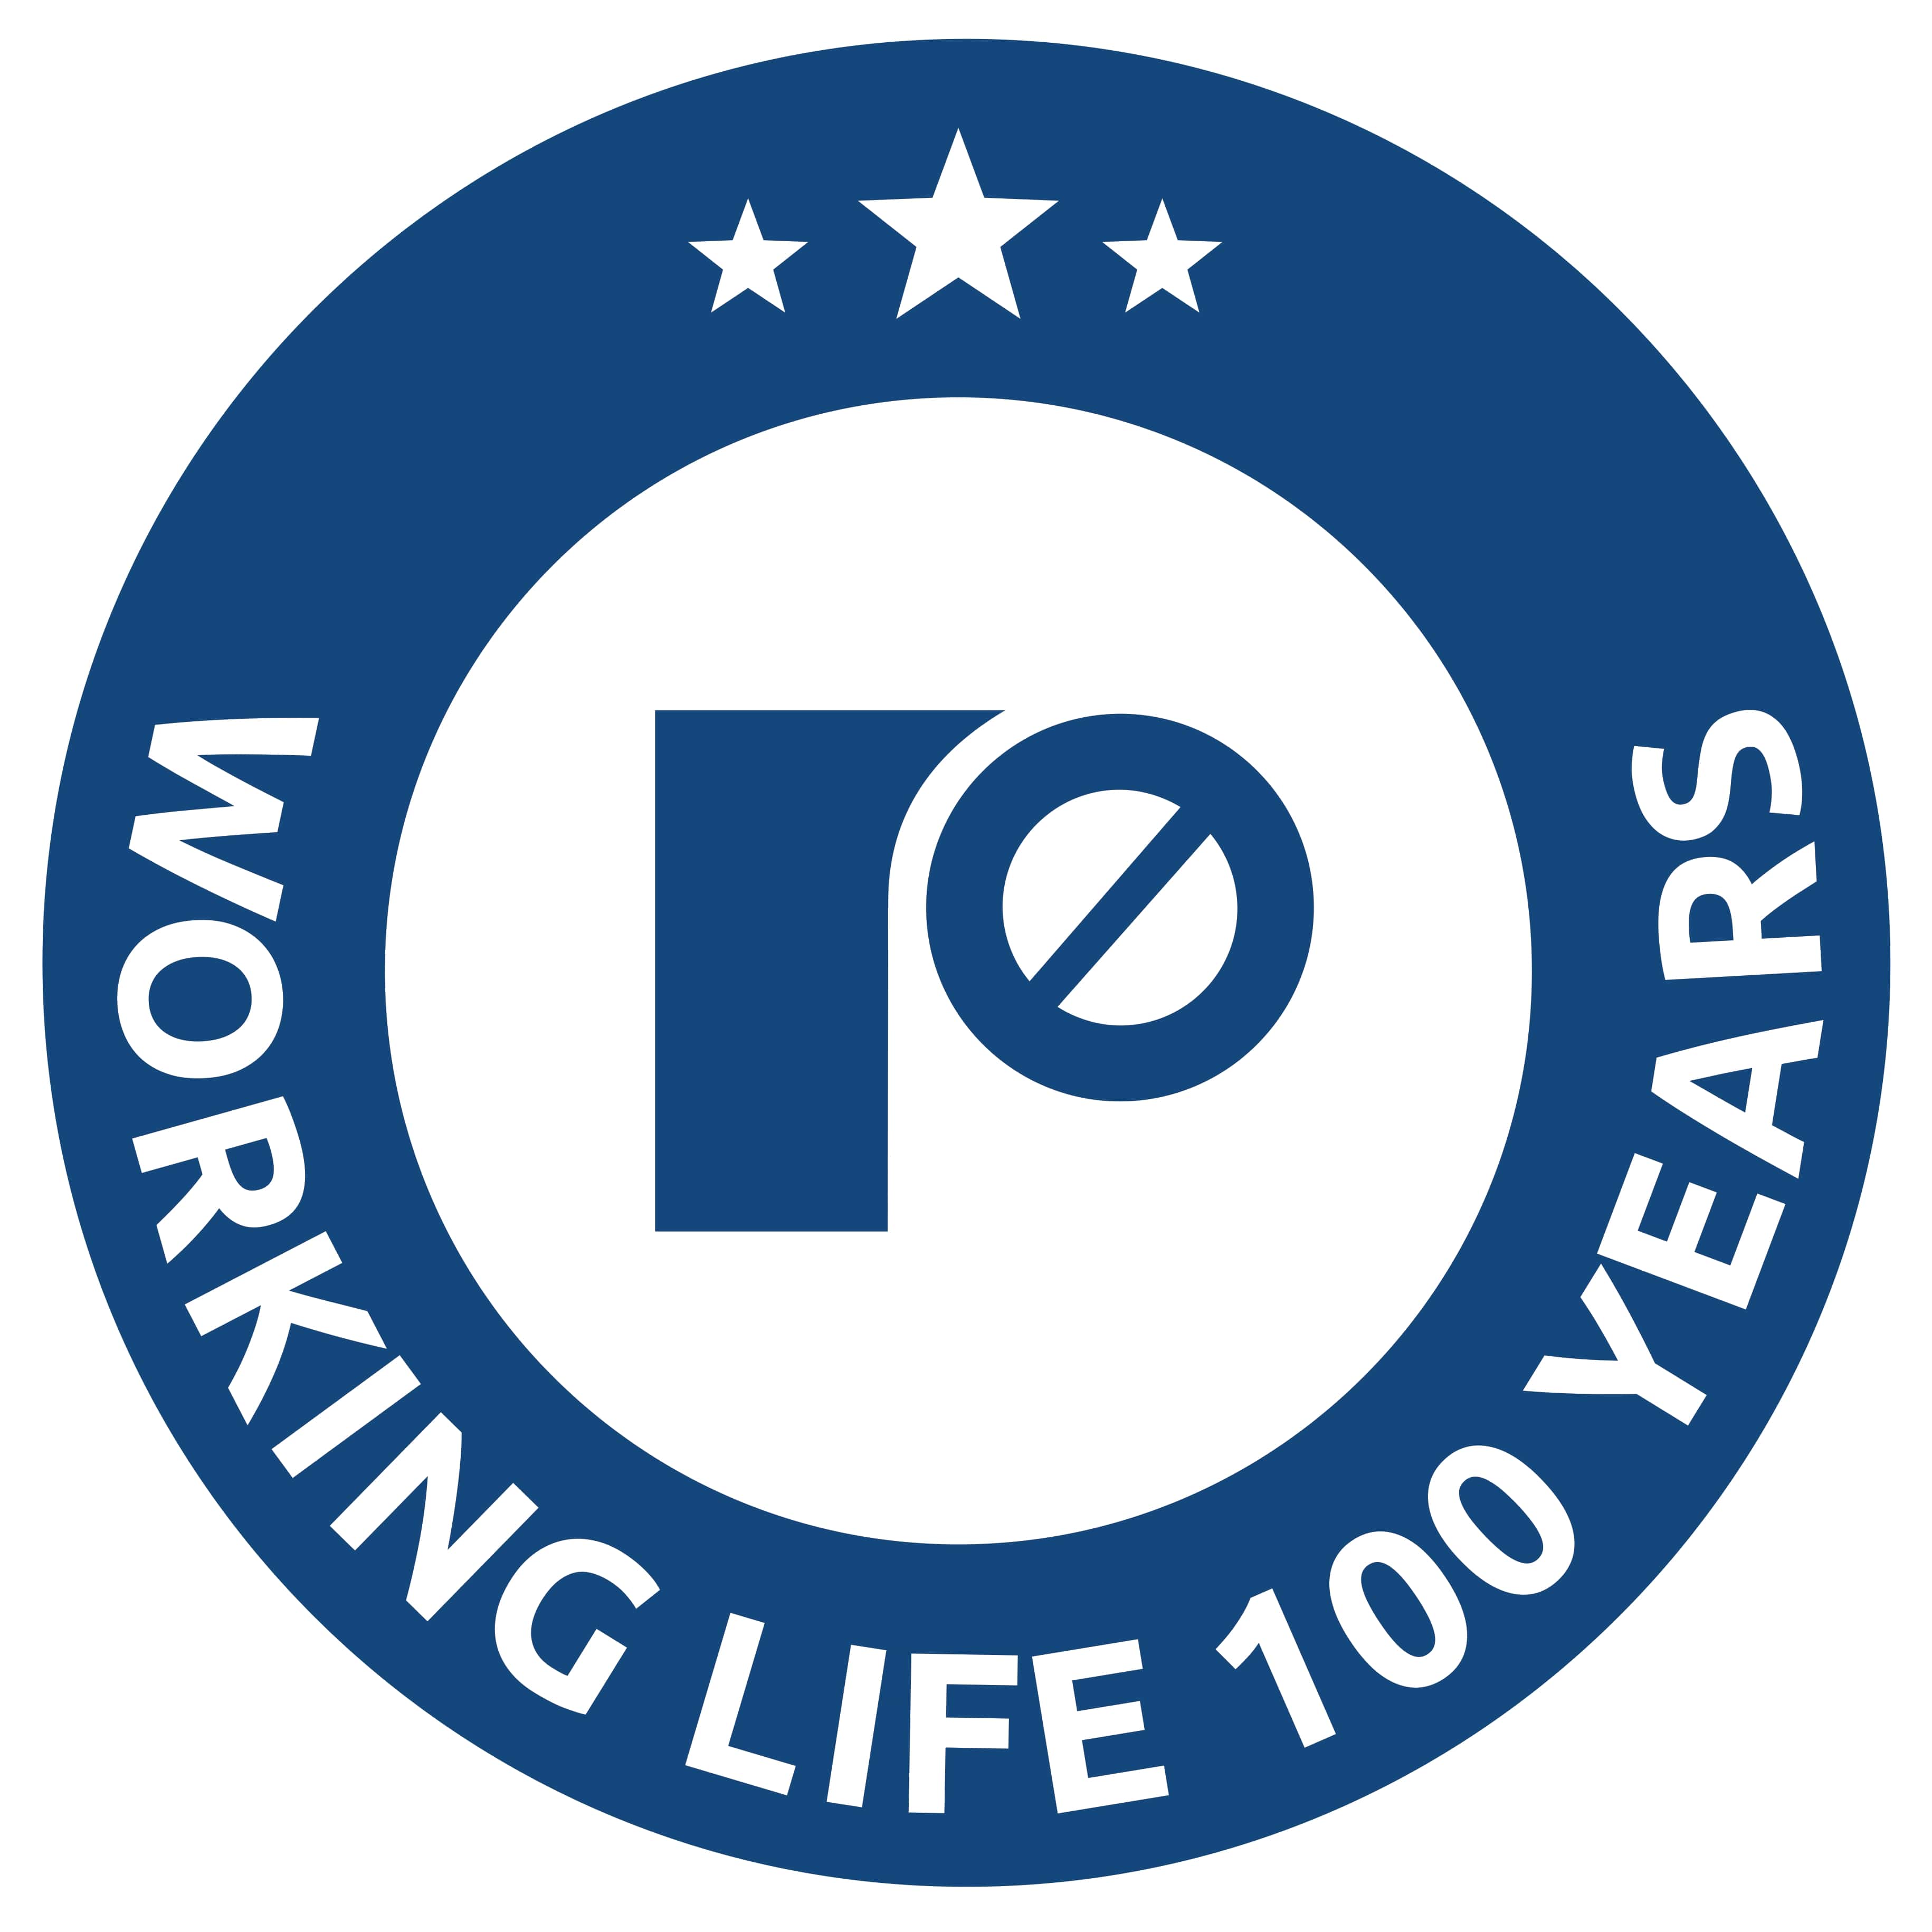 Working life 100 years